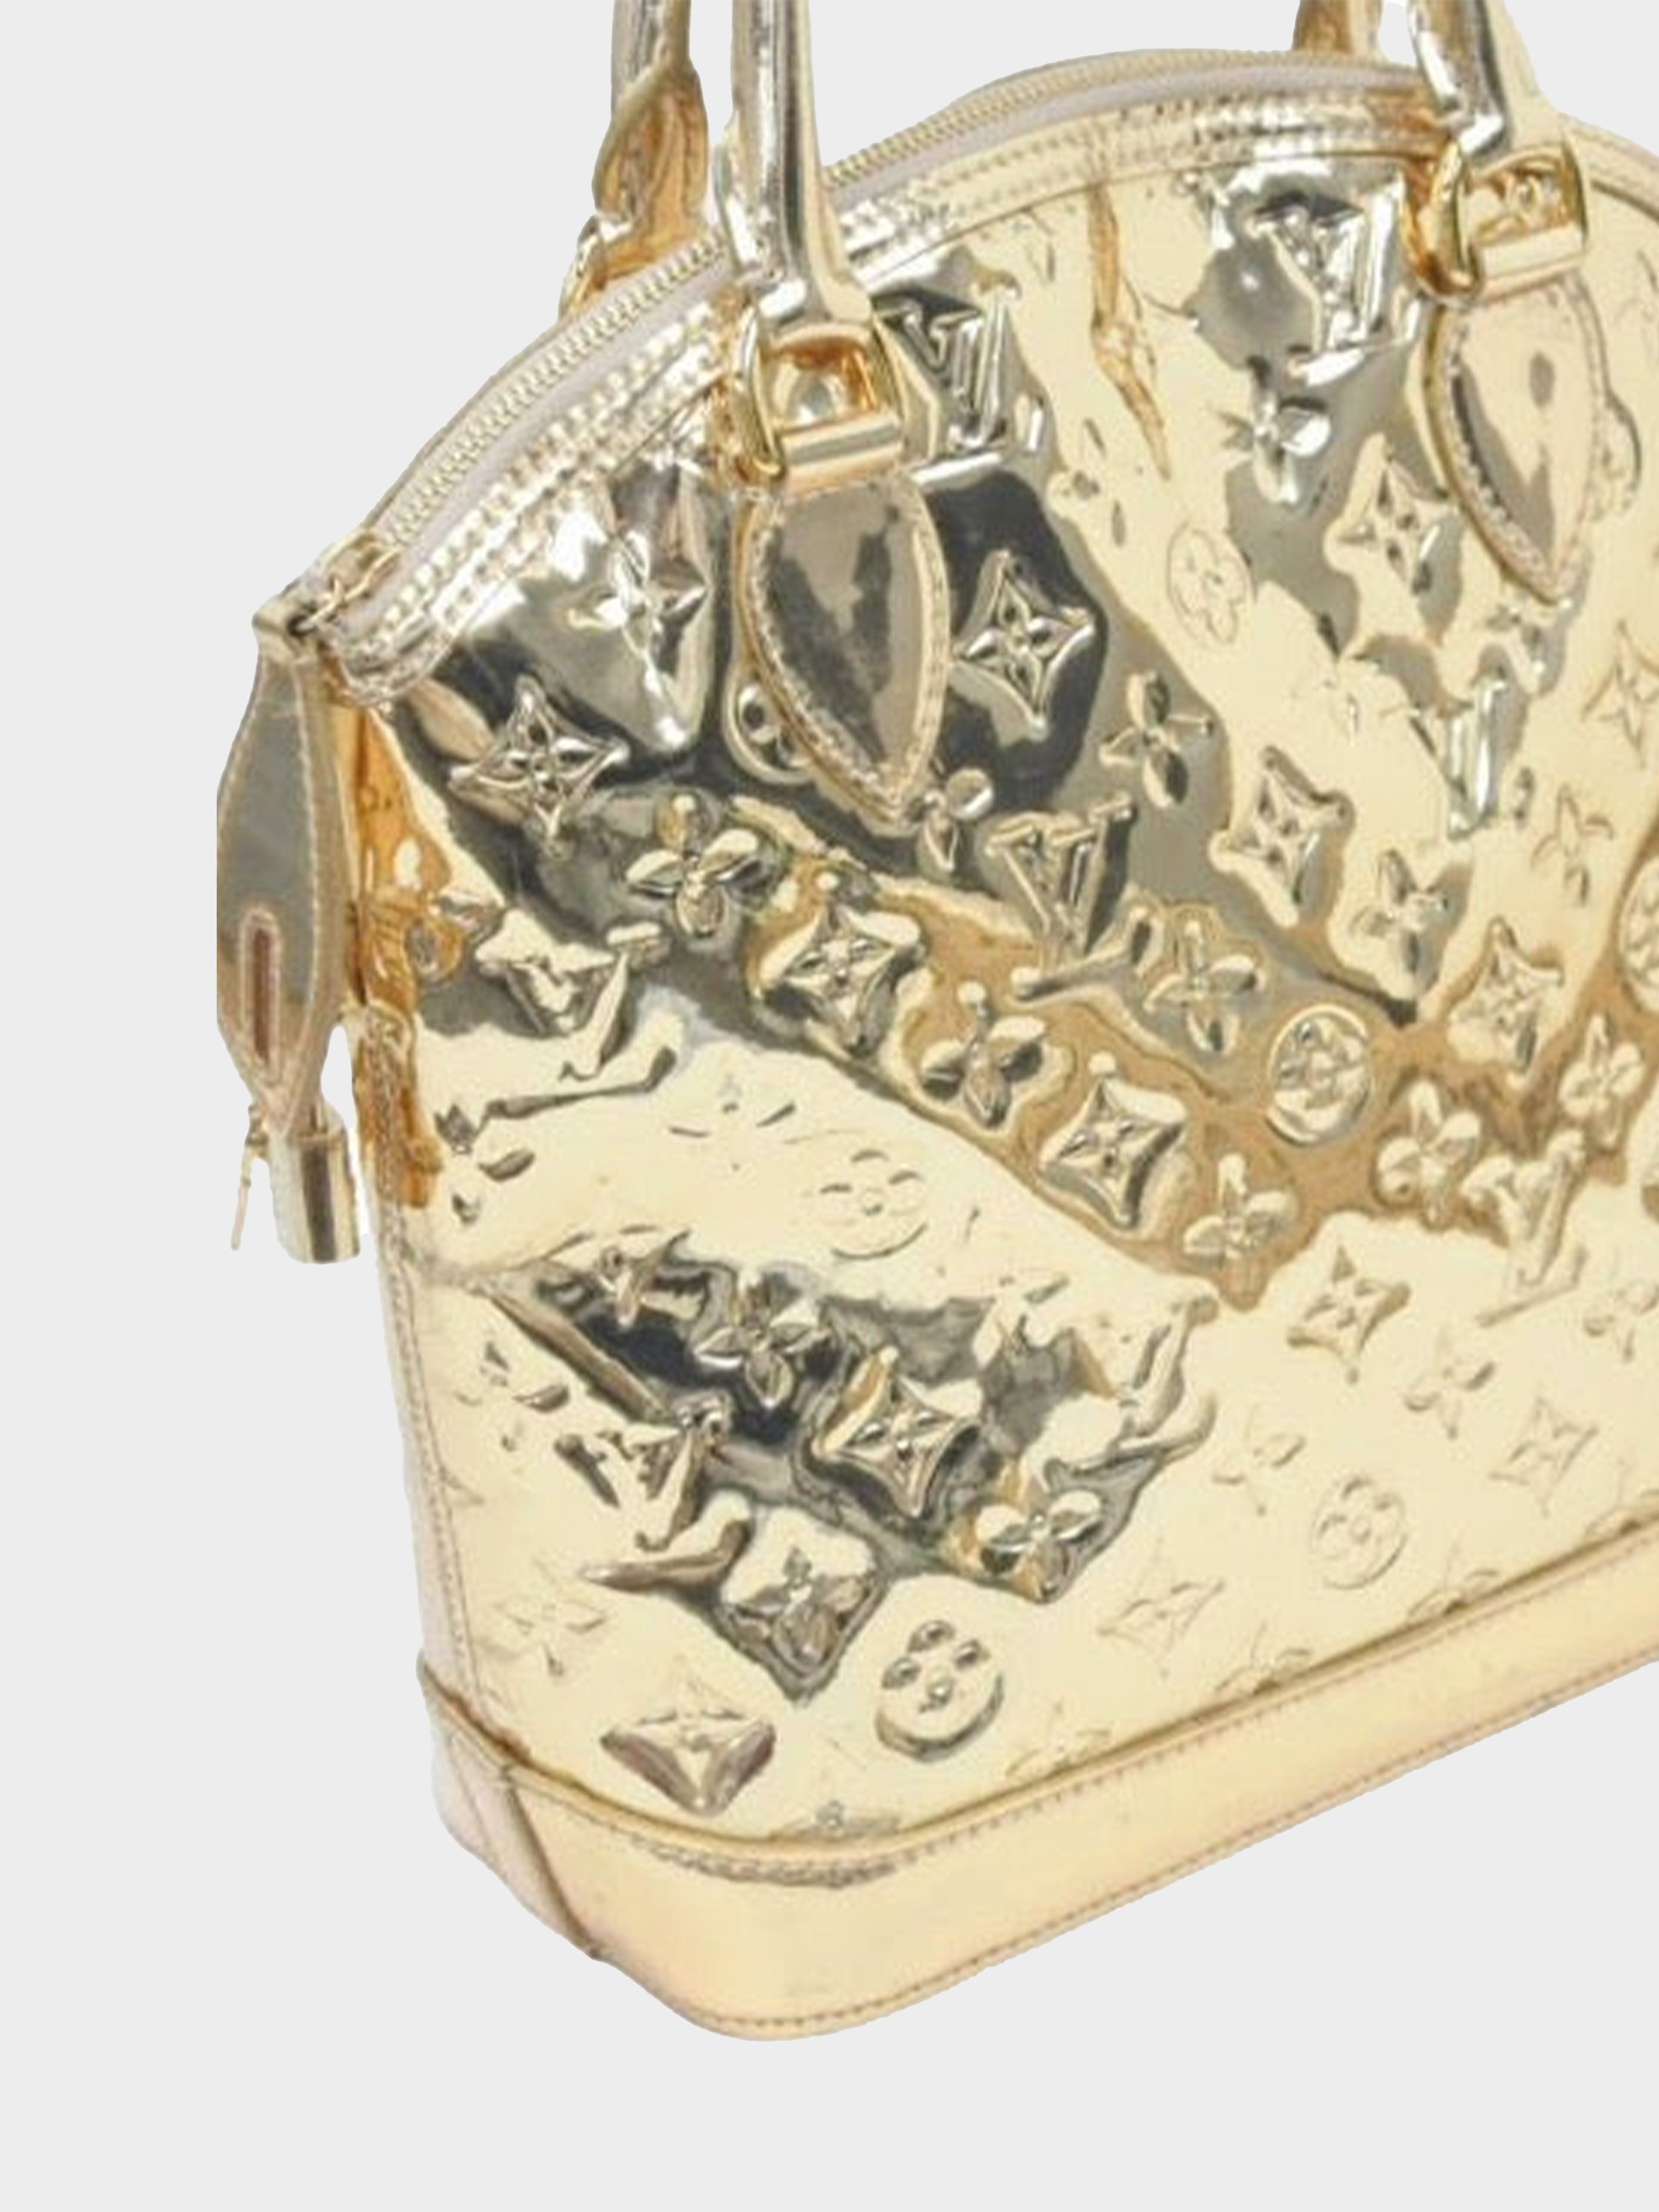 Louis Vuitton Silver Mirror Lockit Bag